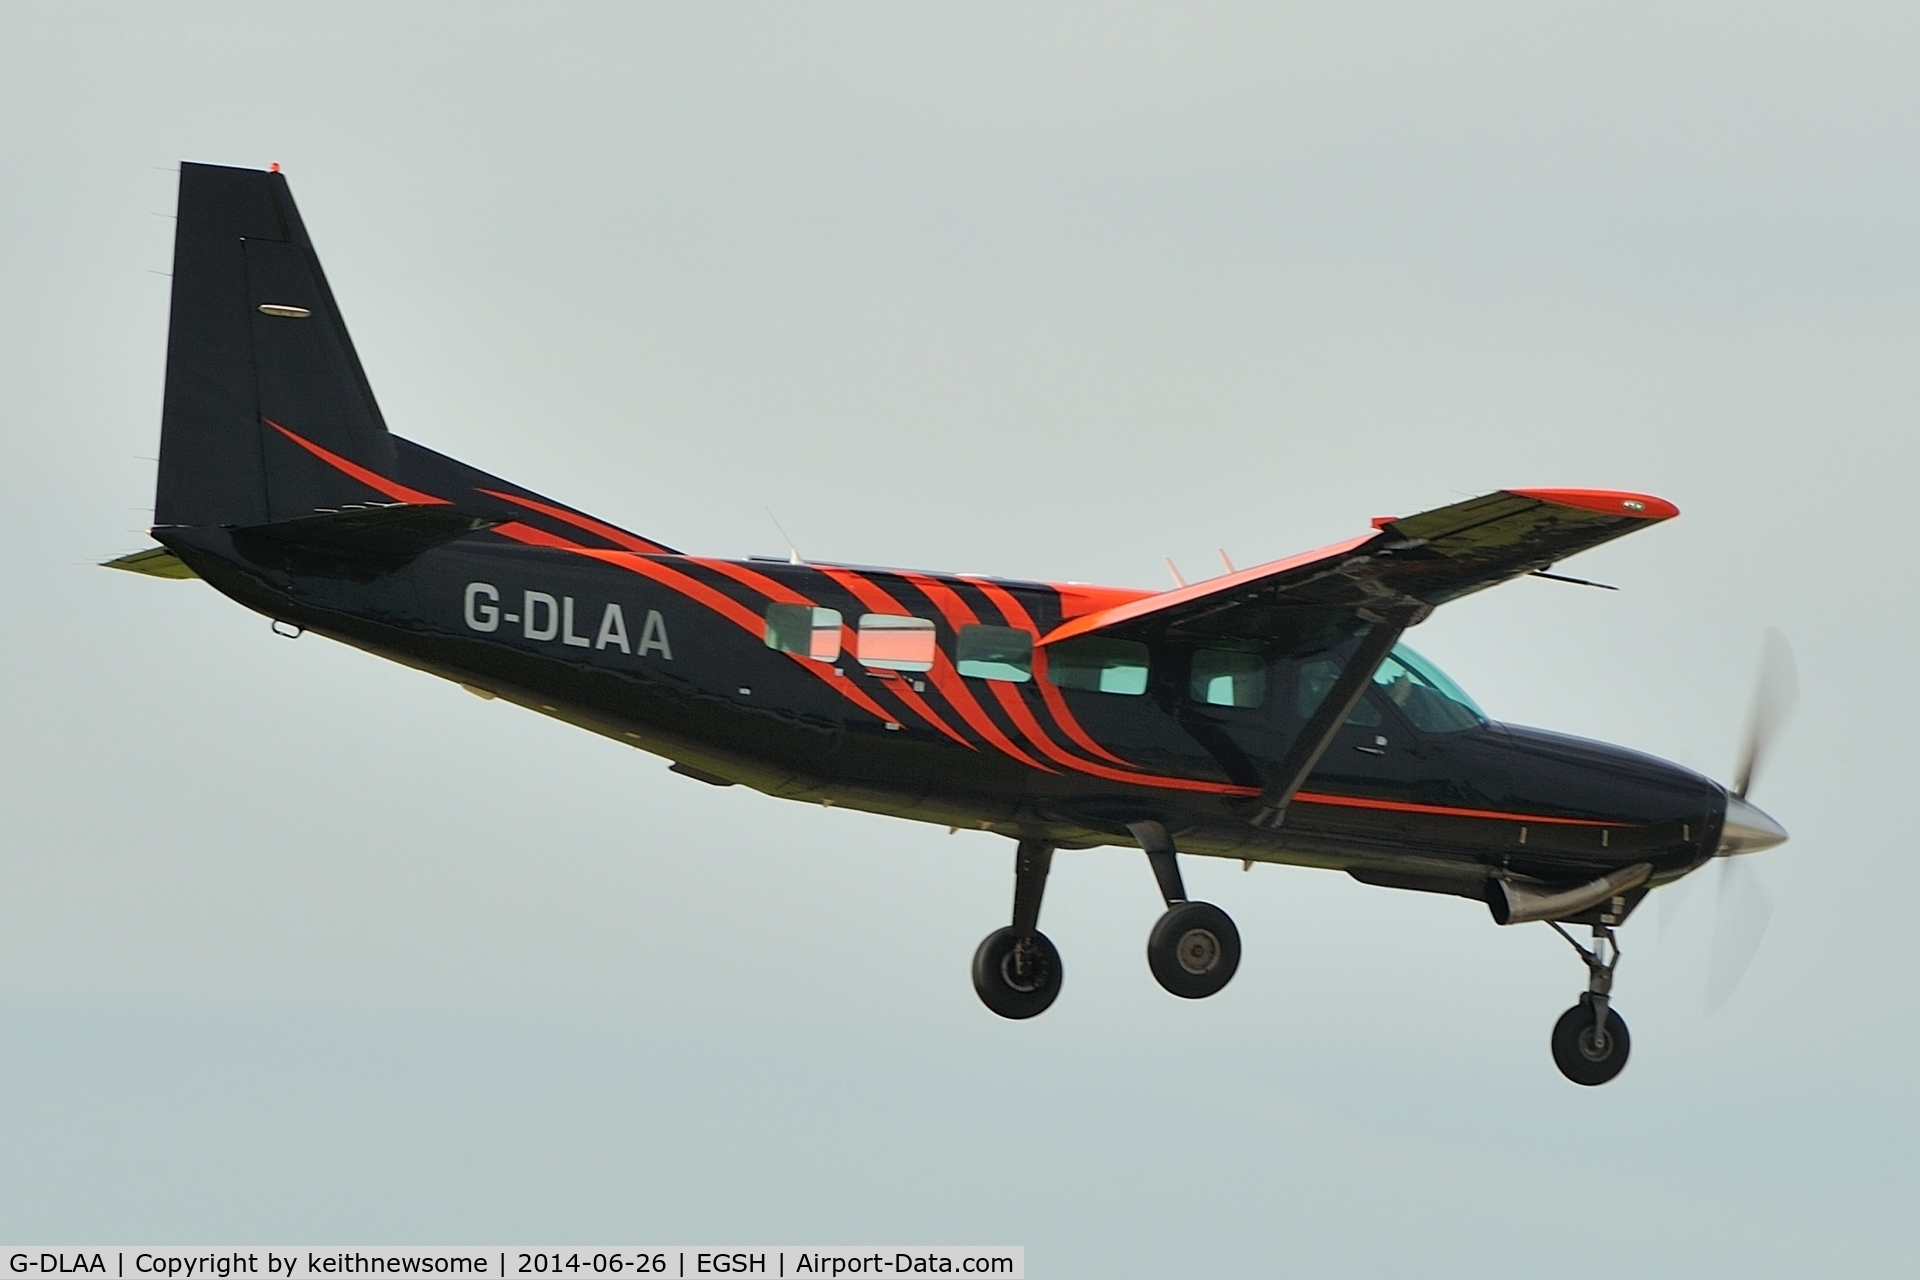 G-DLAA, 2003 Cessna 208 Caravan I C/N 20800367, Royal Norfolk Show parachute display team's aircraft.